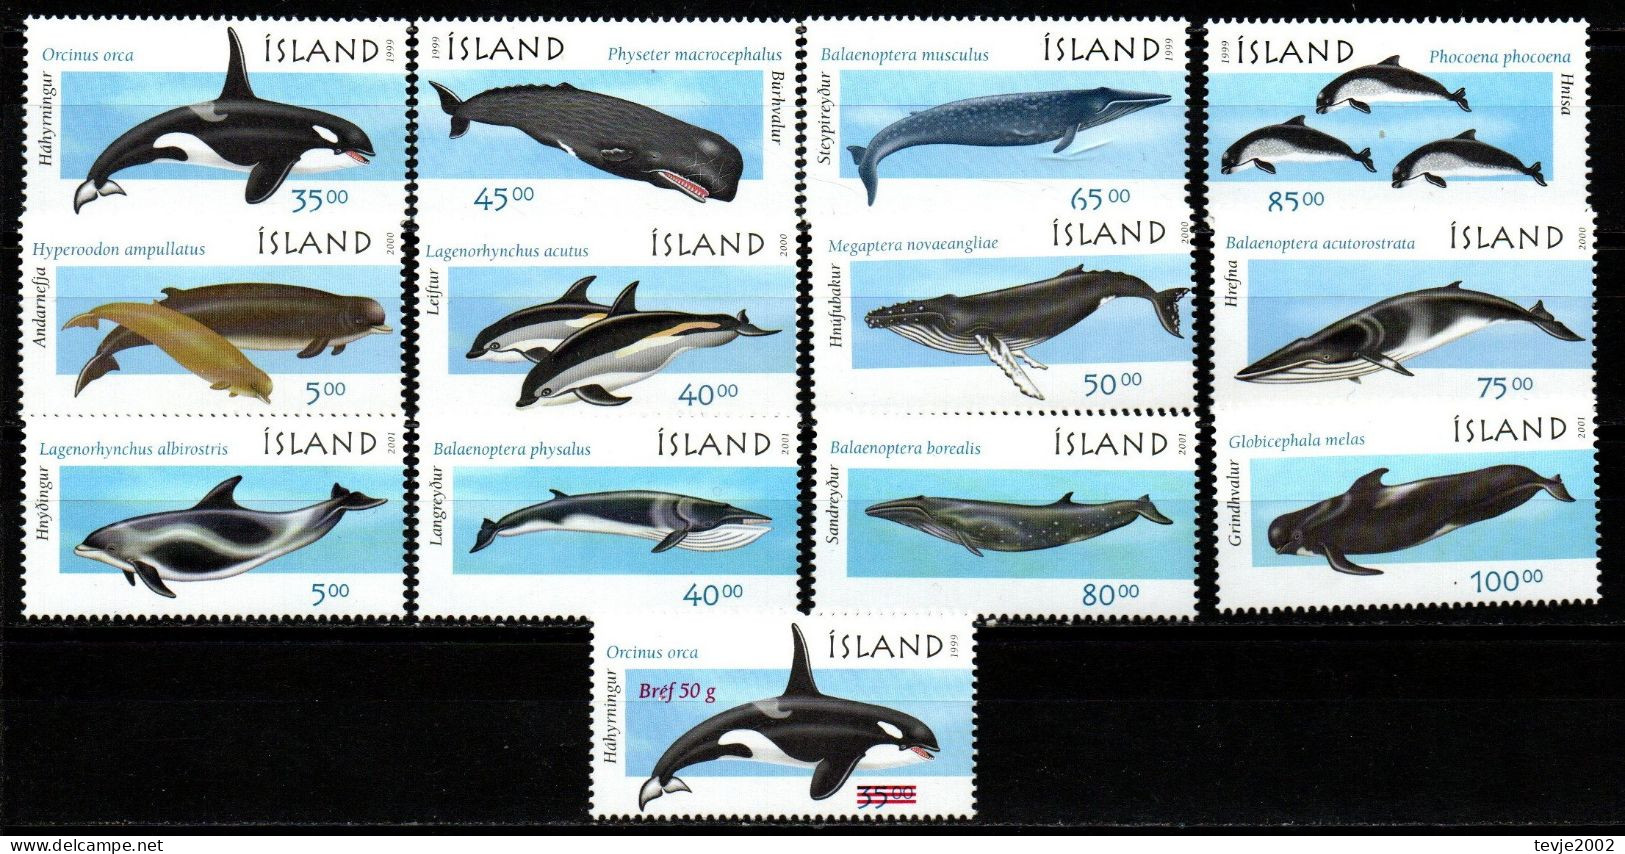 Island 1999-2001 - Mi.Nr. 905-908, 954-957, 988-992 - Postfrisch MNH - Tiere Animals Wale Whales - Wale